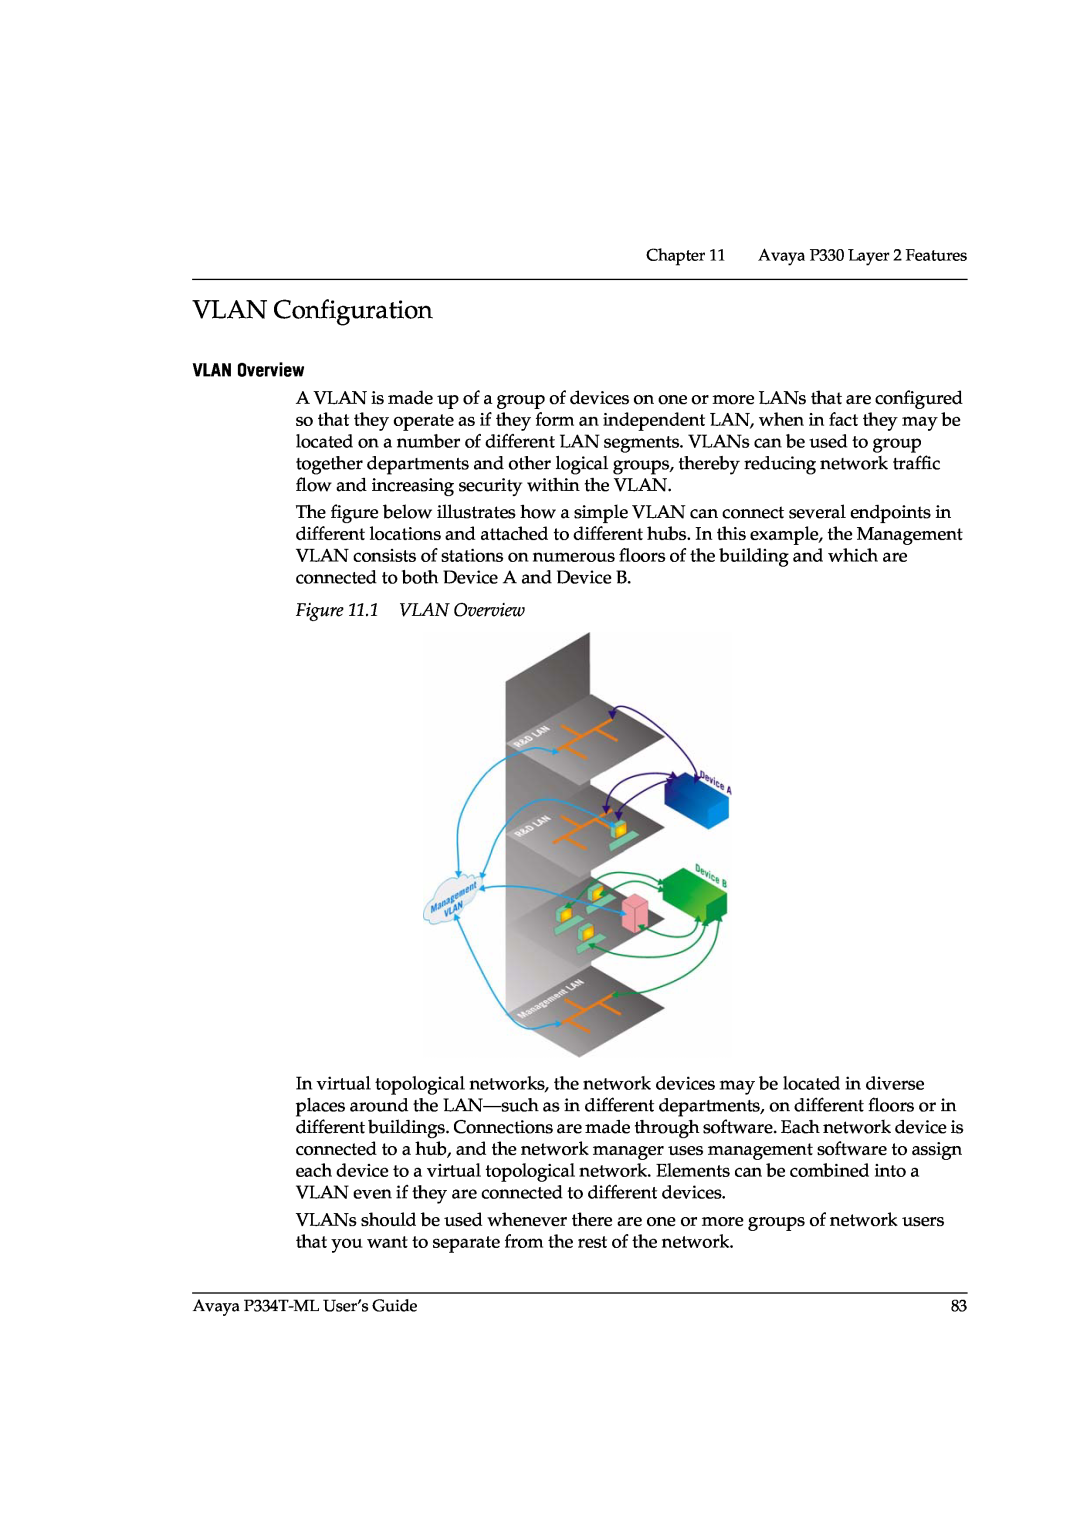 Avaya P3343T-ML manual VLAN Configuration, VLAN Overview 